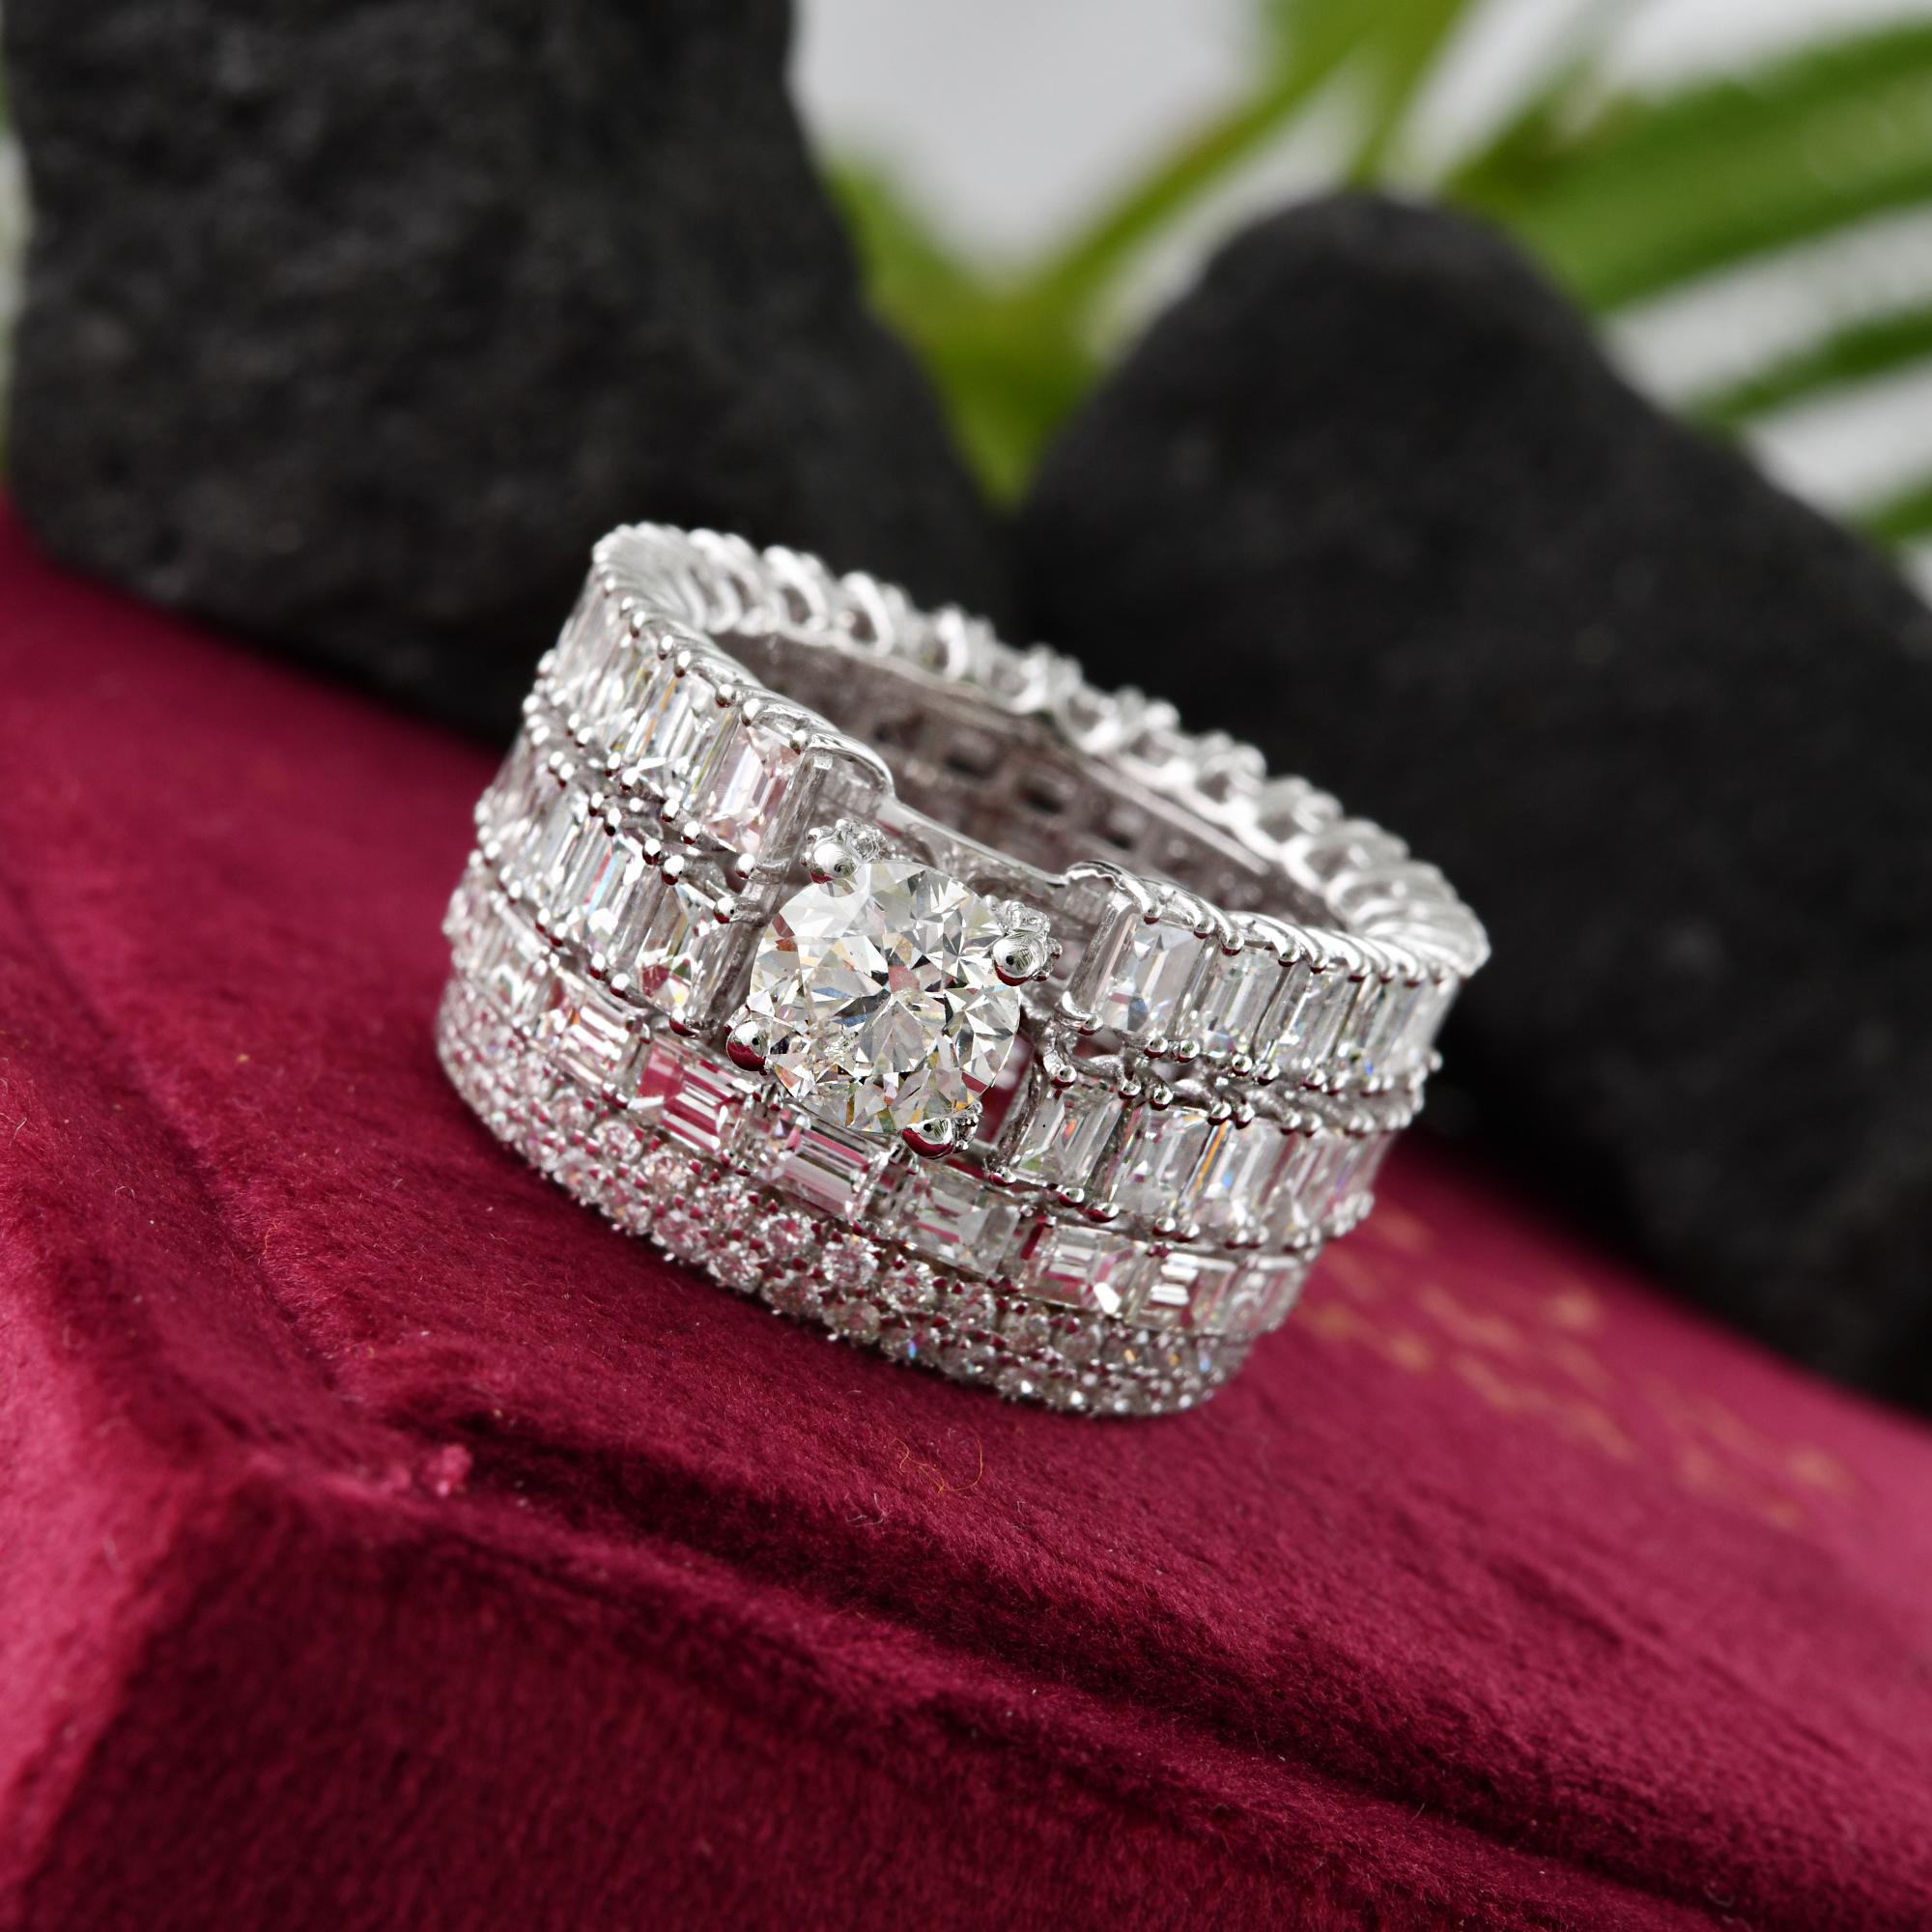 For Sale:  7.3 Carat SI Clarity HI Color Round Emerald Cut Diamond Ring 18 Karat White Gold 4